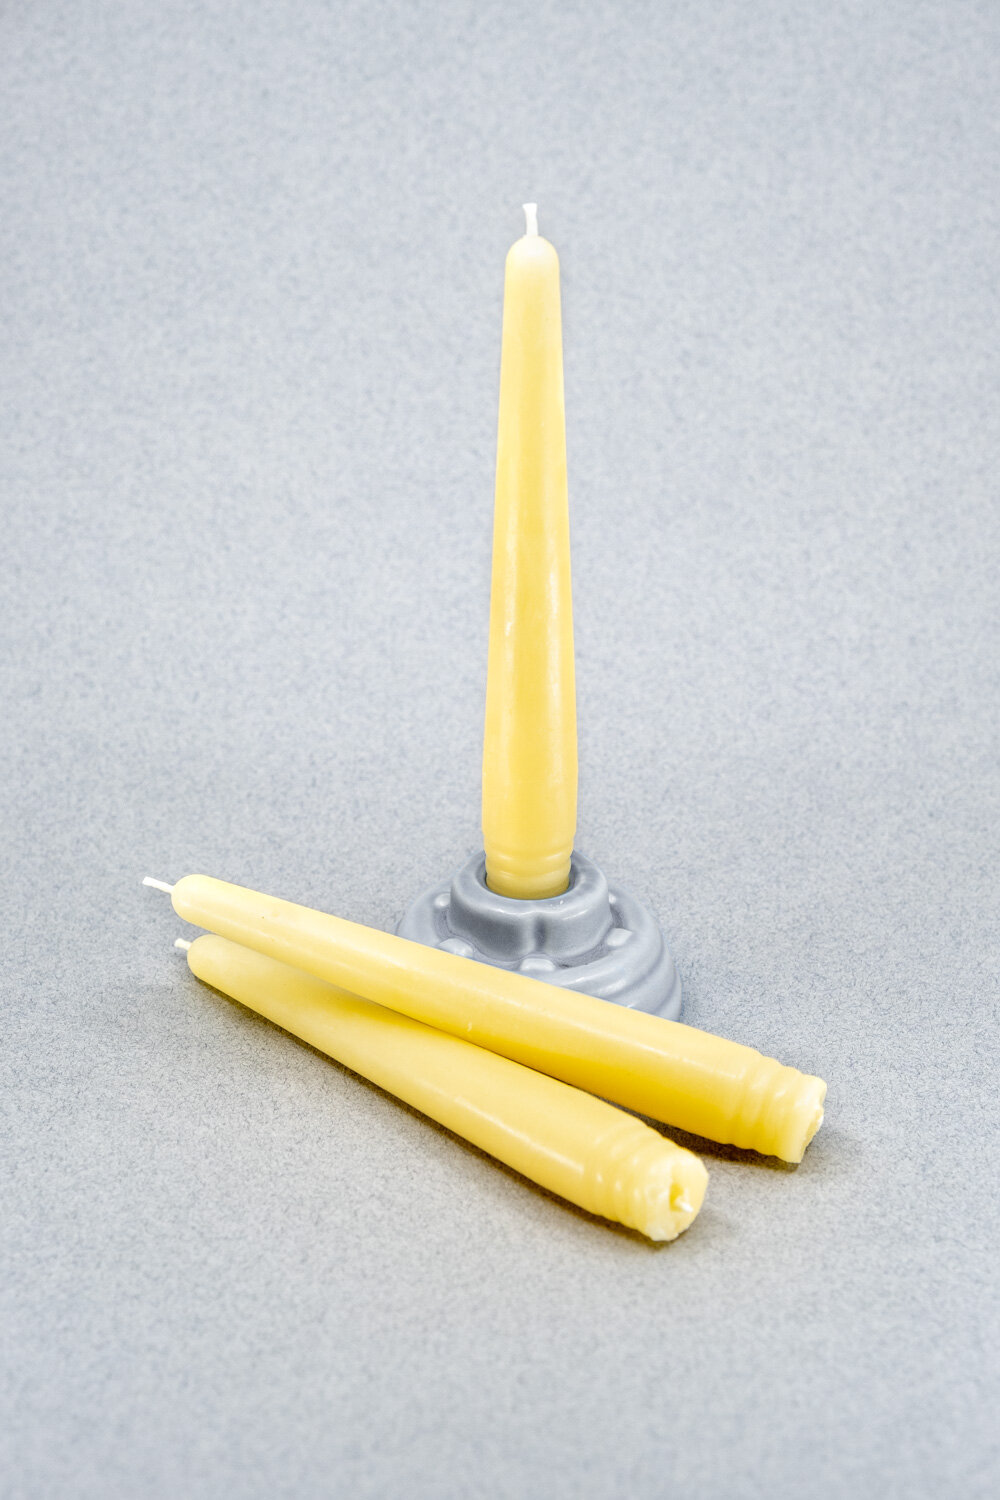 100% Pure Beeswax Pillar Candle-5” wide Beeswax Pillar Candle-Pure Organic  Beeswax Candle-16 point star shaped pure beeswax pillar candle